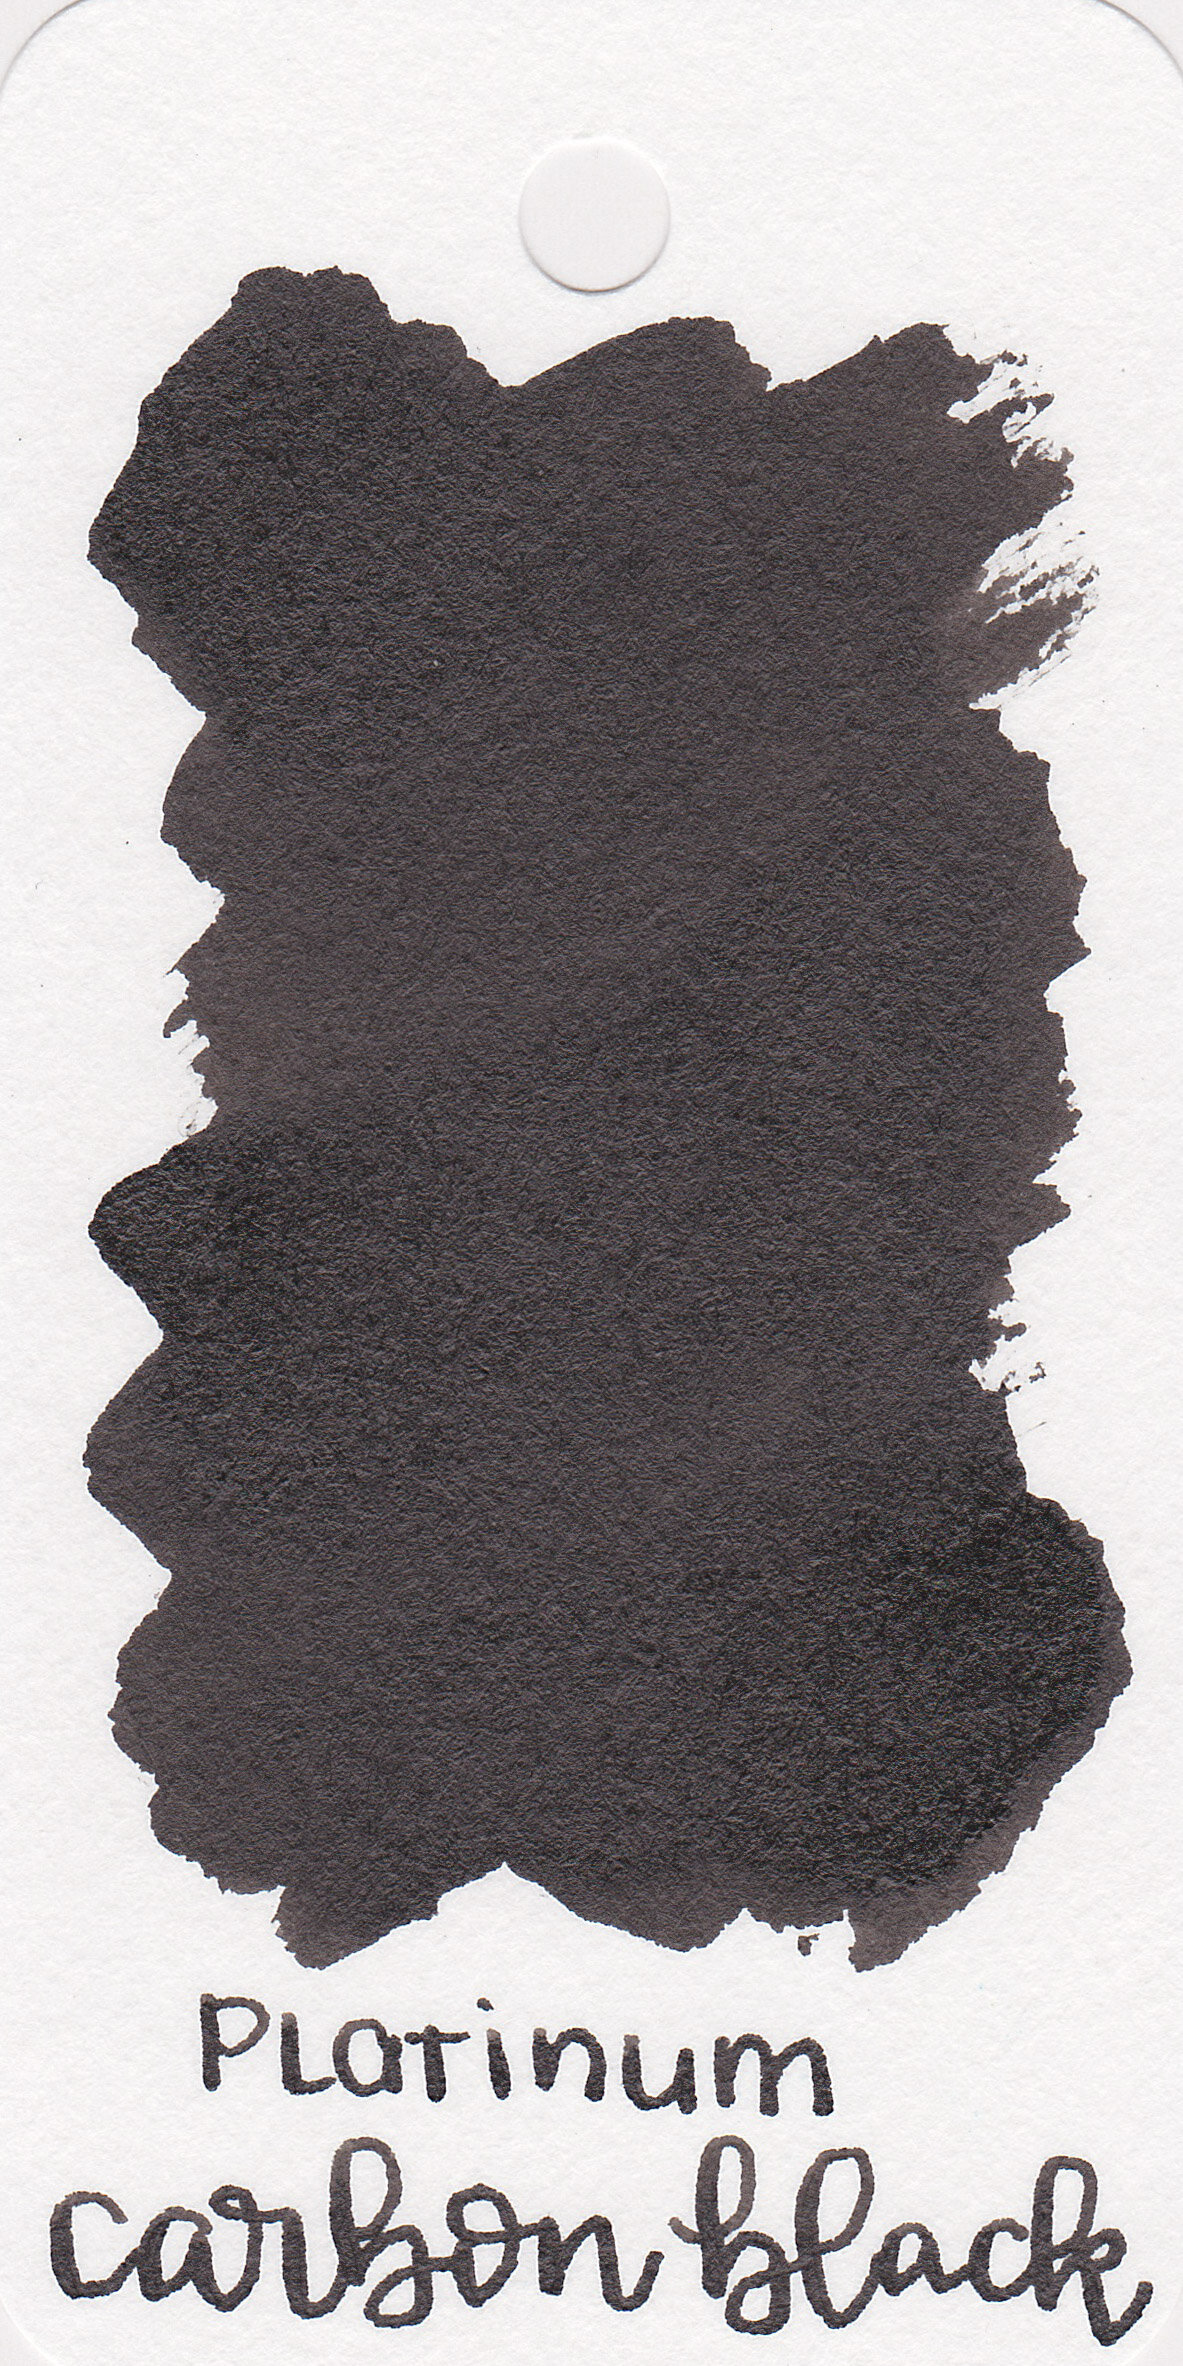 The Ultimate Guide to Black Fountain Pen Inks: Darkest Blacks, Top 5 P – BD  Pen